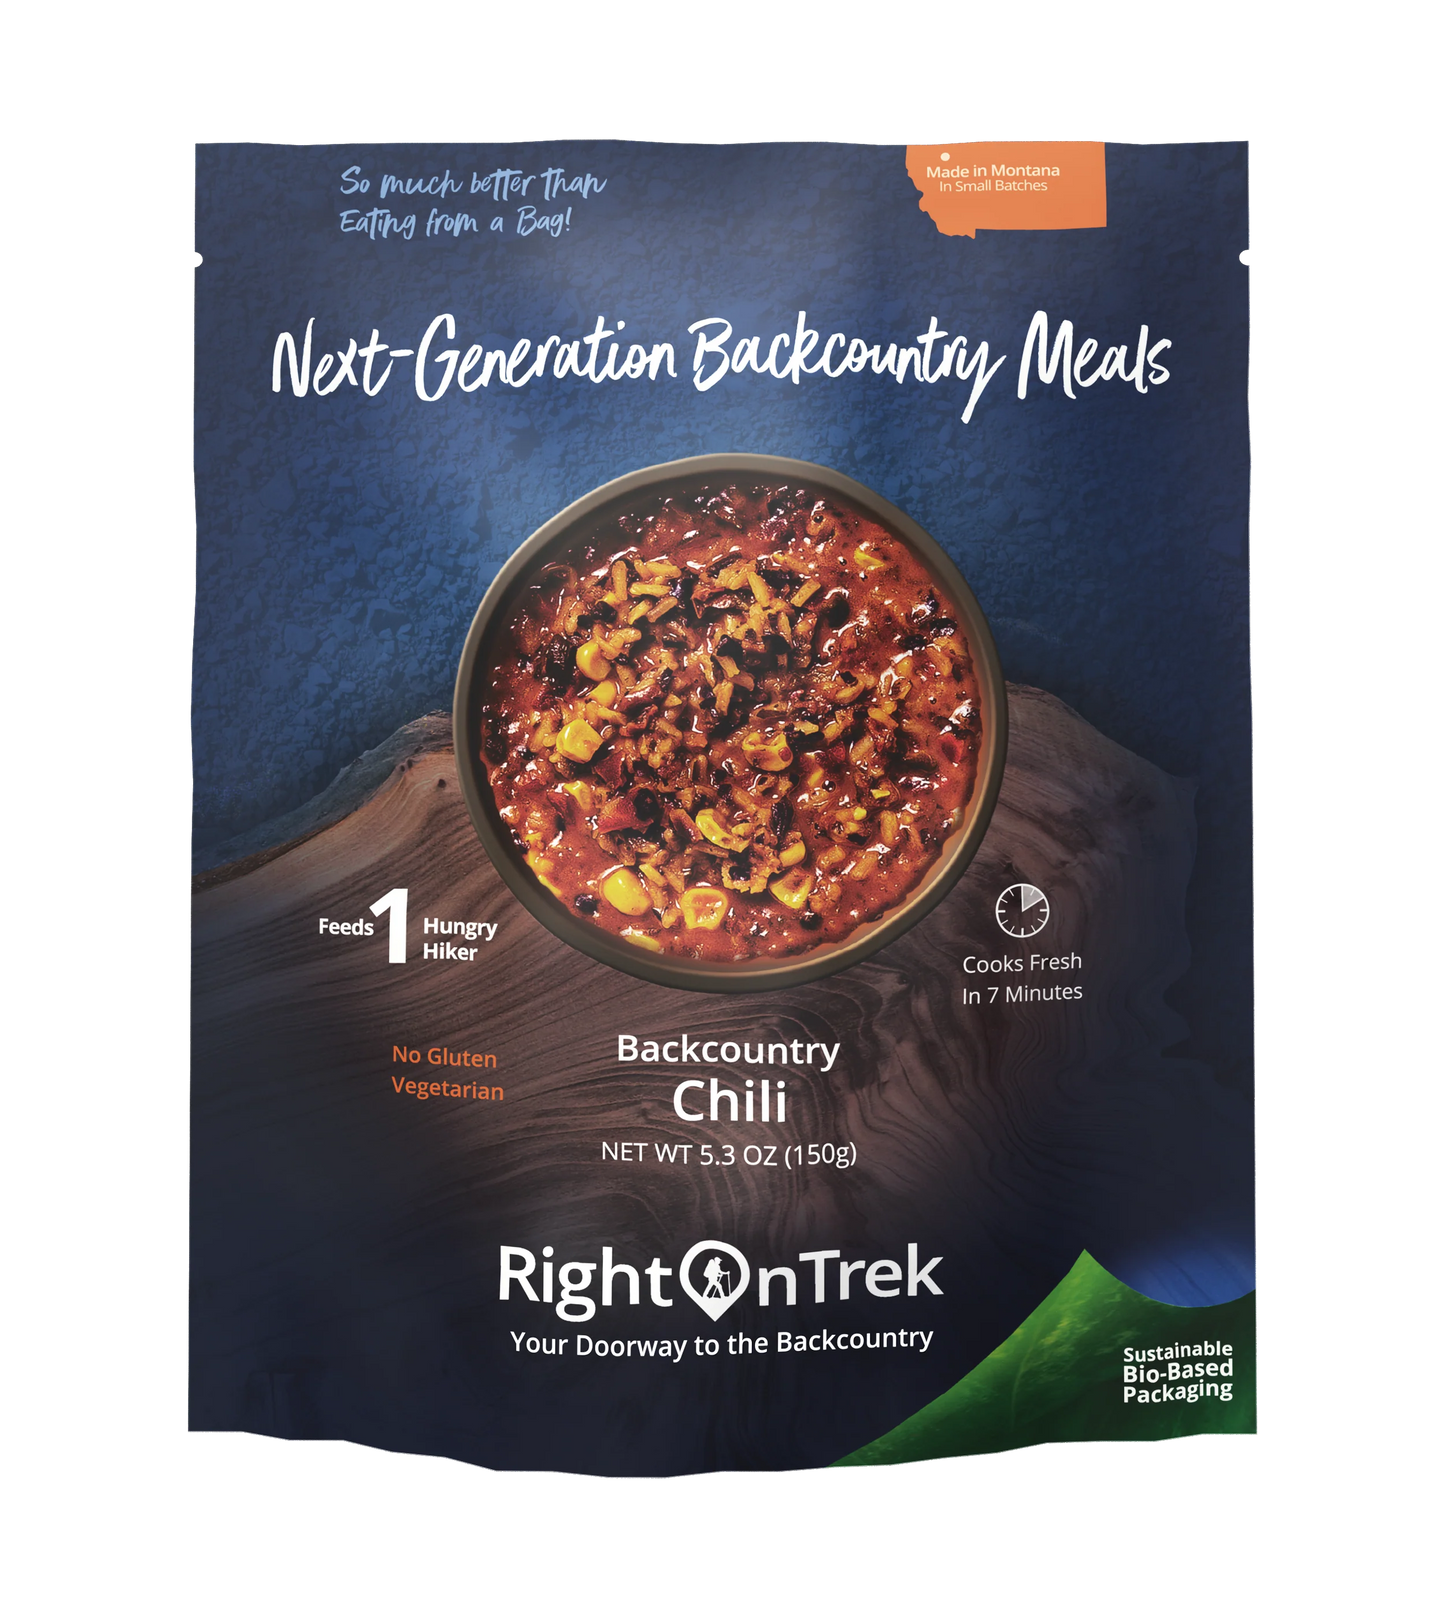 RightOnTrek backcountry chili feeds 1 person